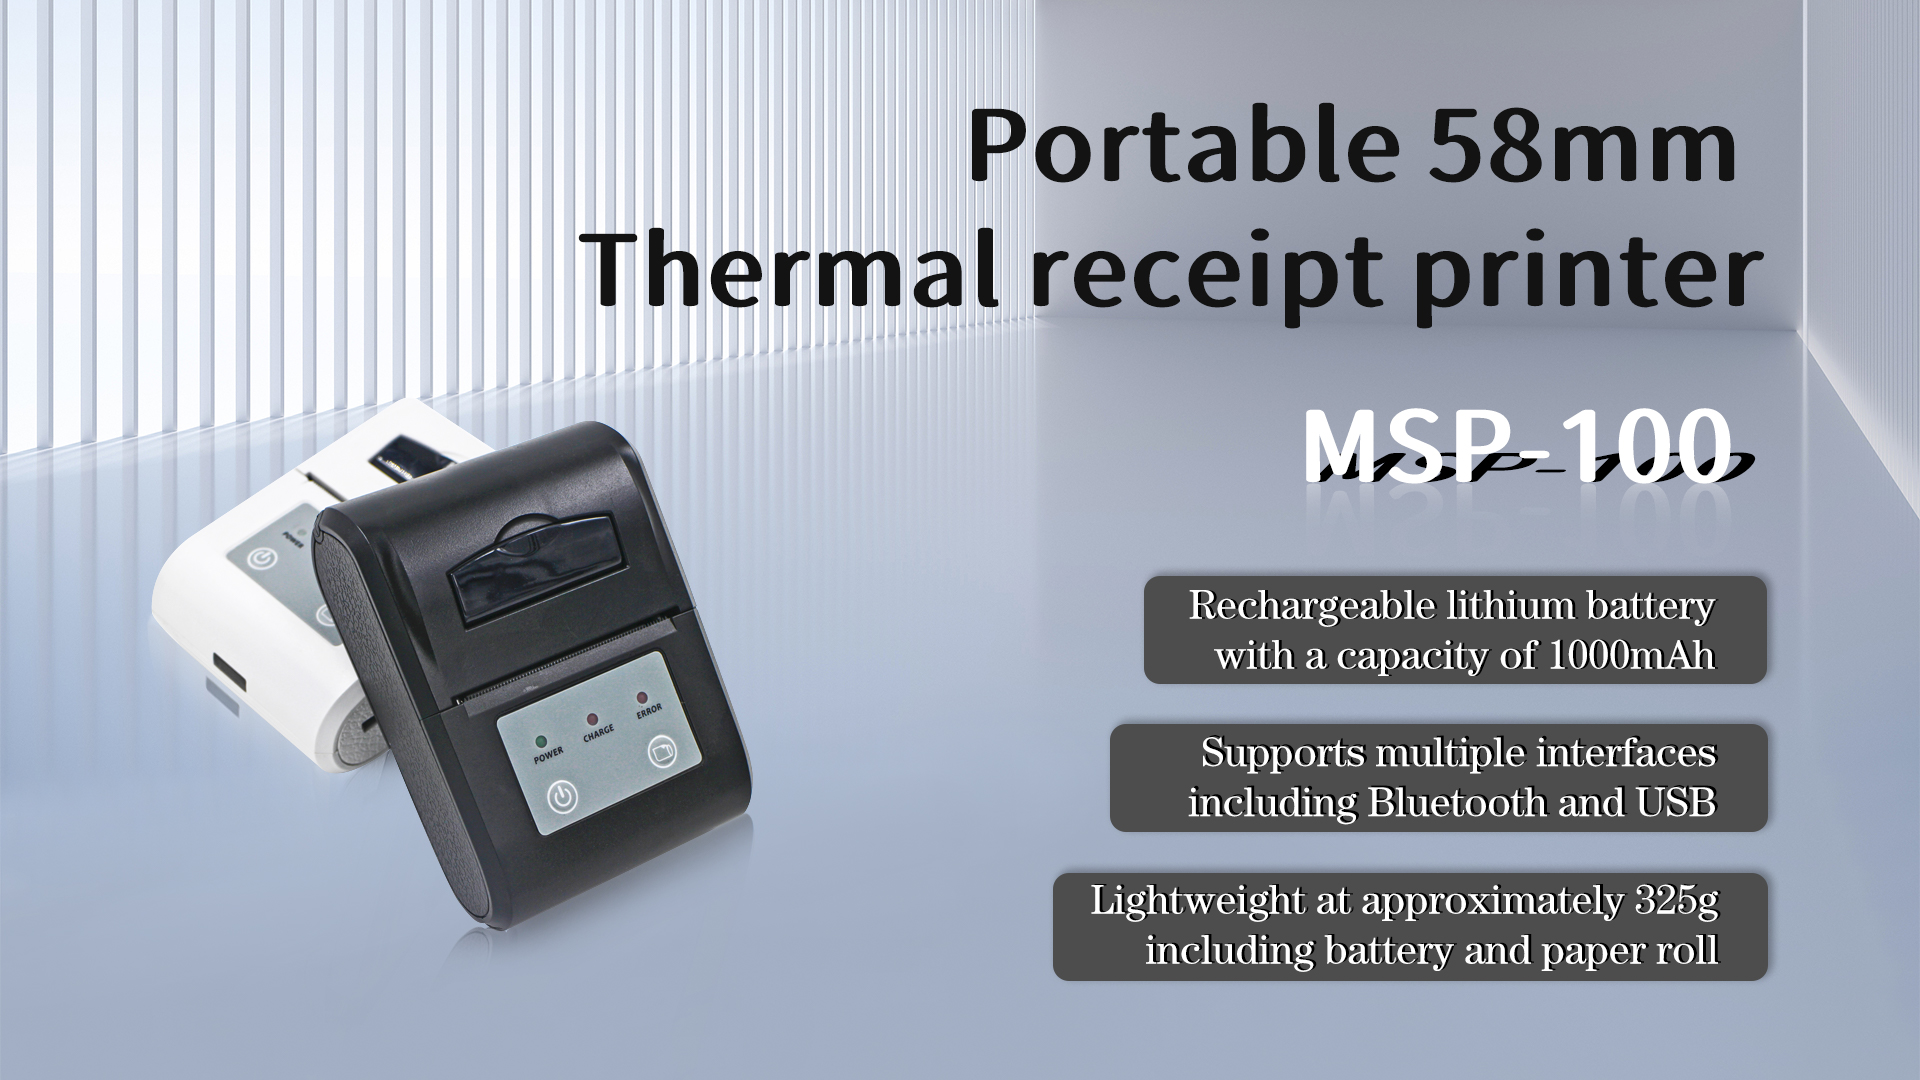 Application of MSP-100 portable receipt printer